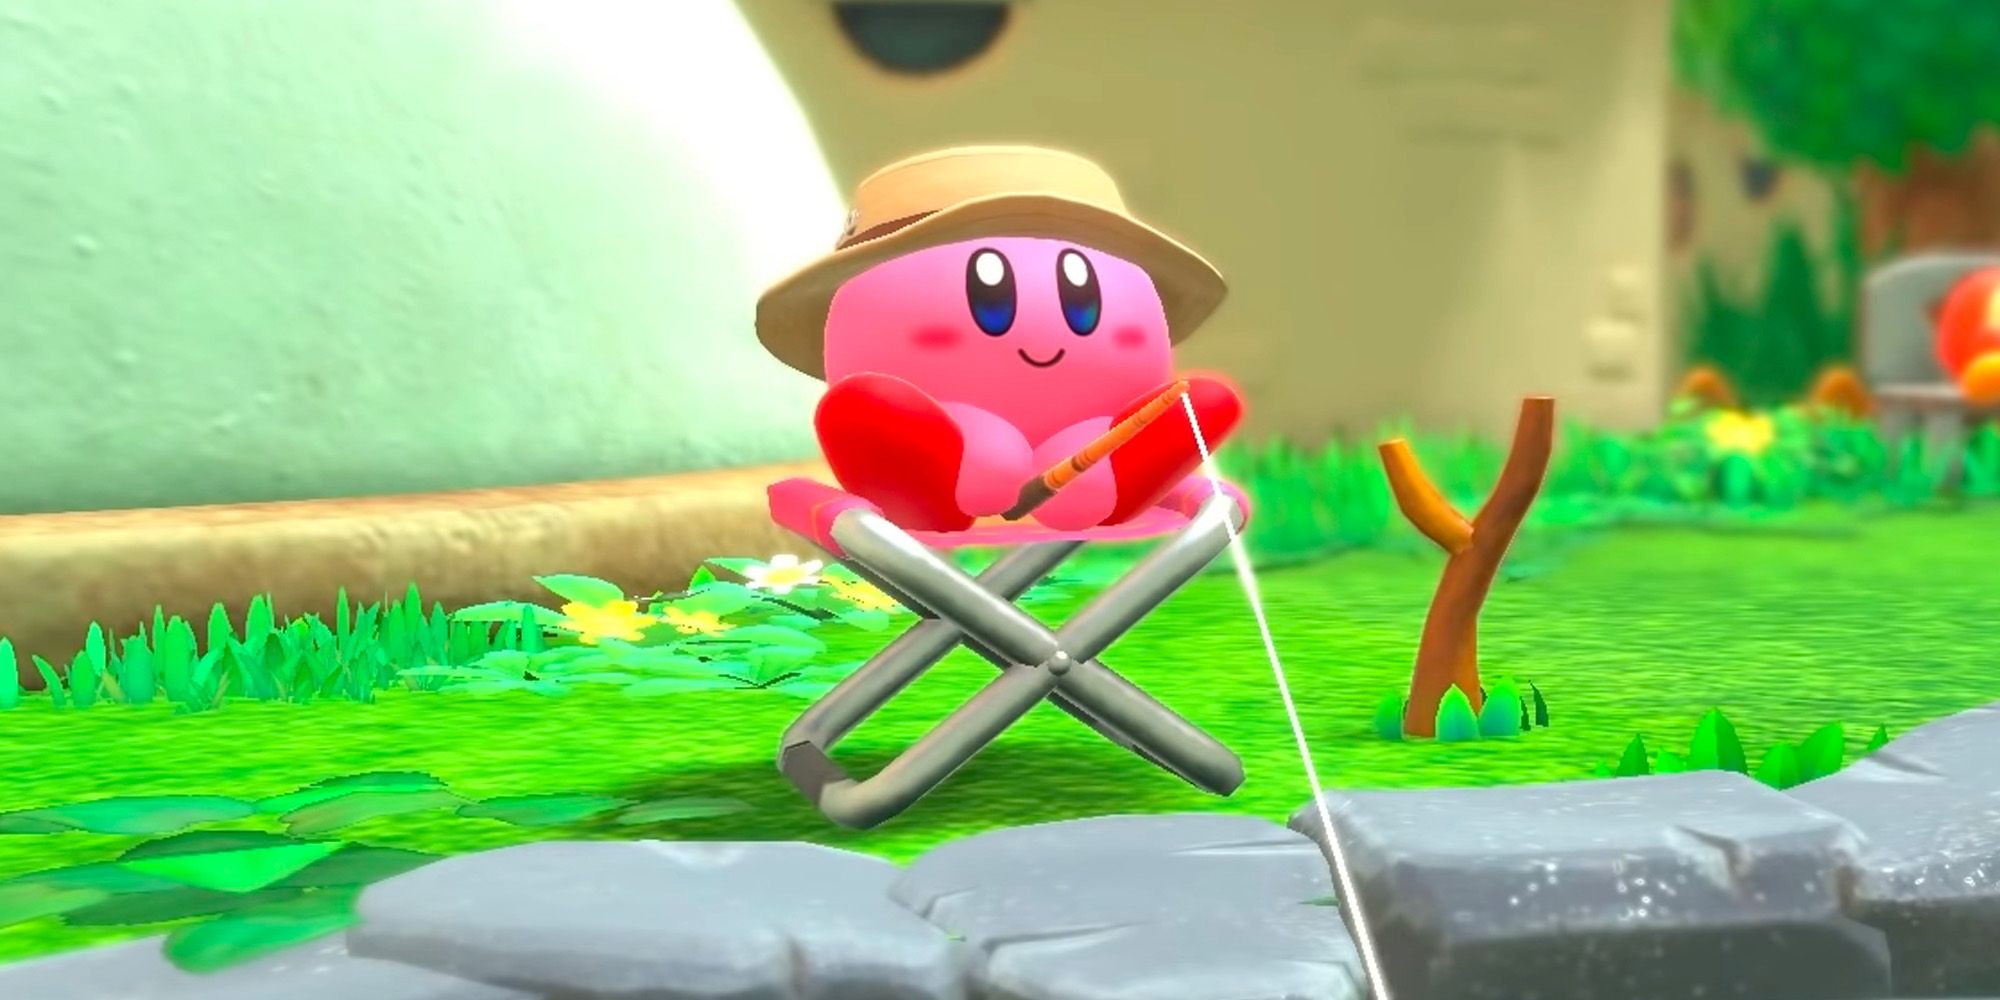 Kirby starting the Flash Fishing Minigame